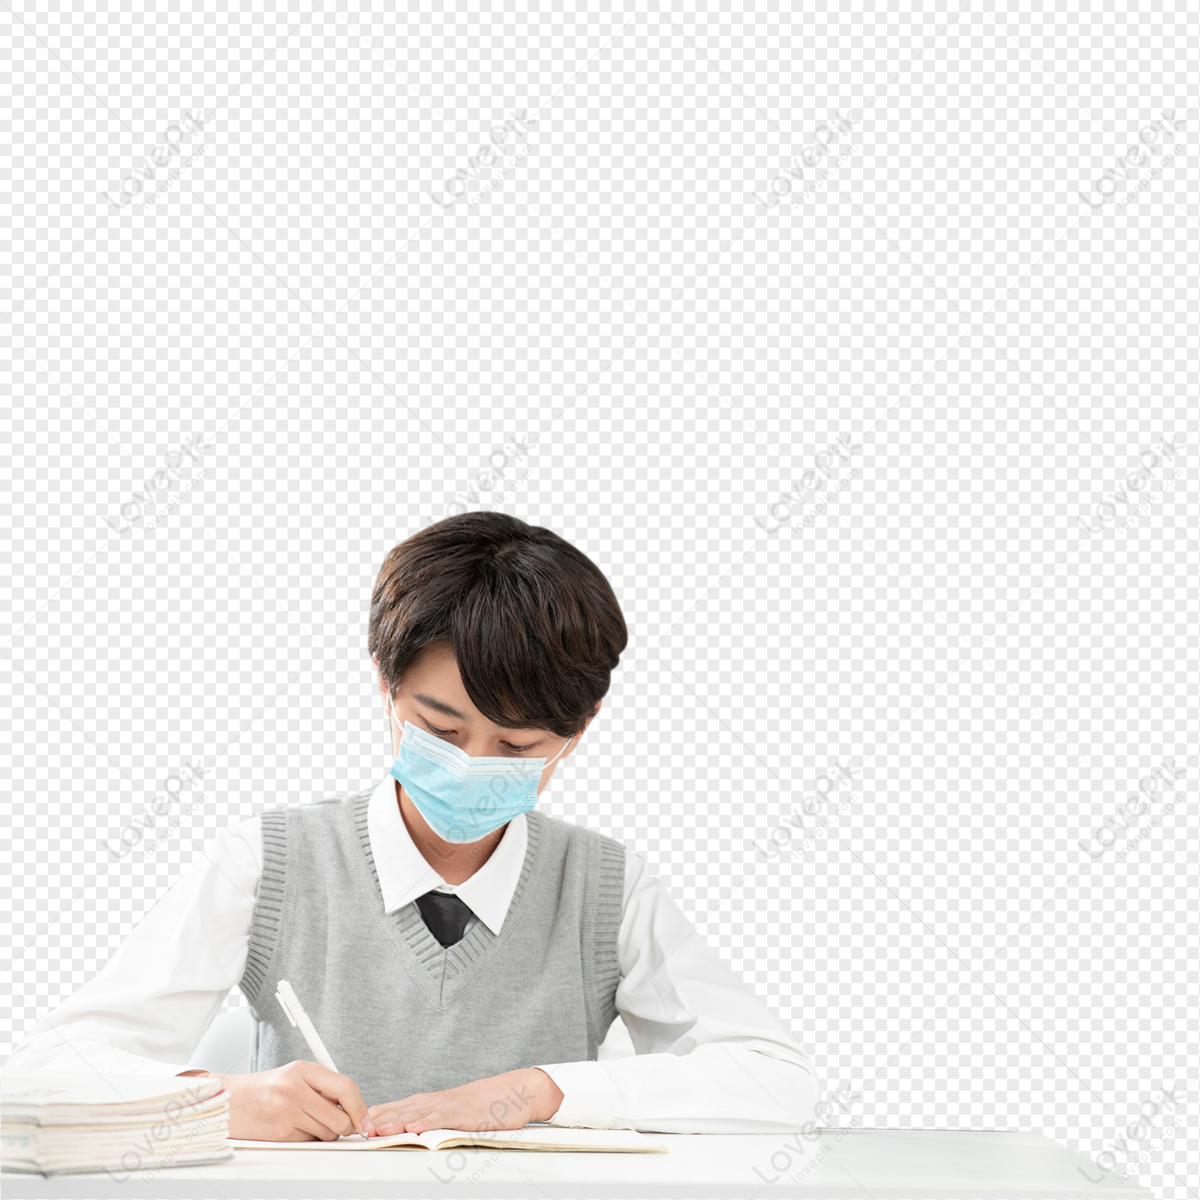 Middle school students wearing masks doing homework, university mask, student wear, school mask png transparent background